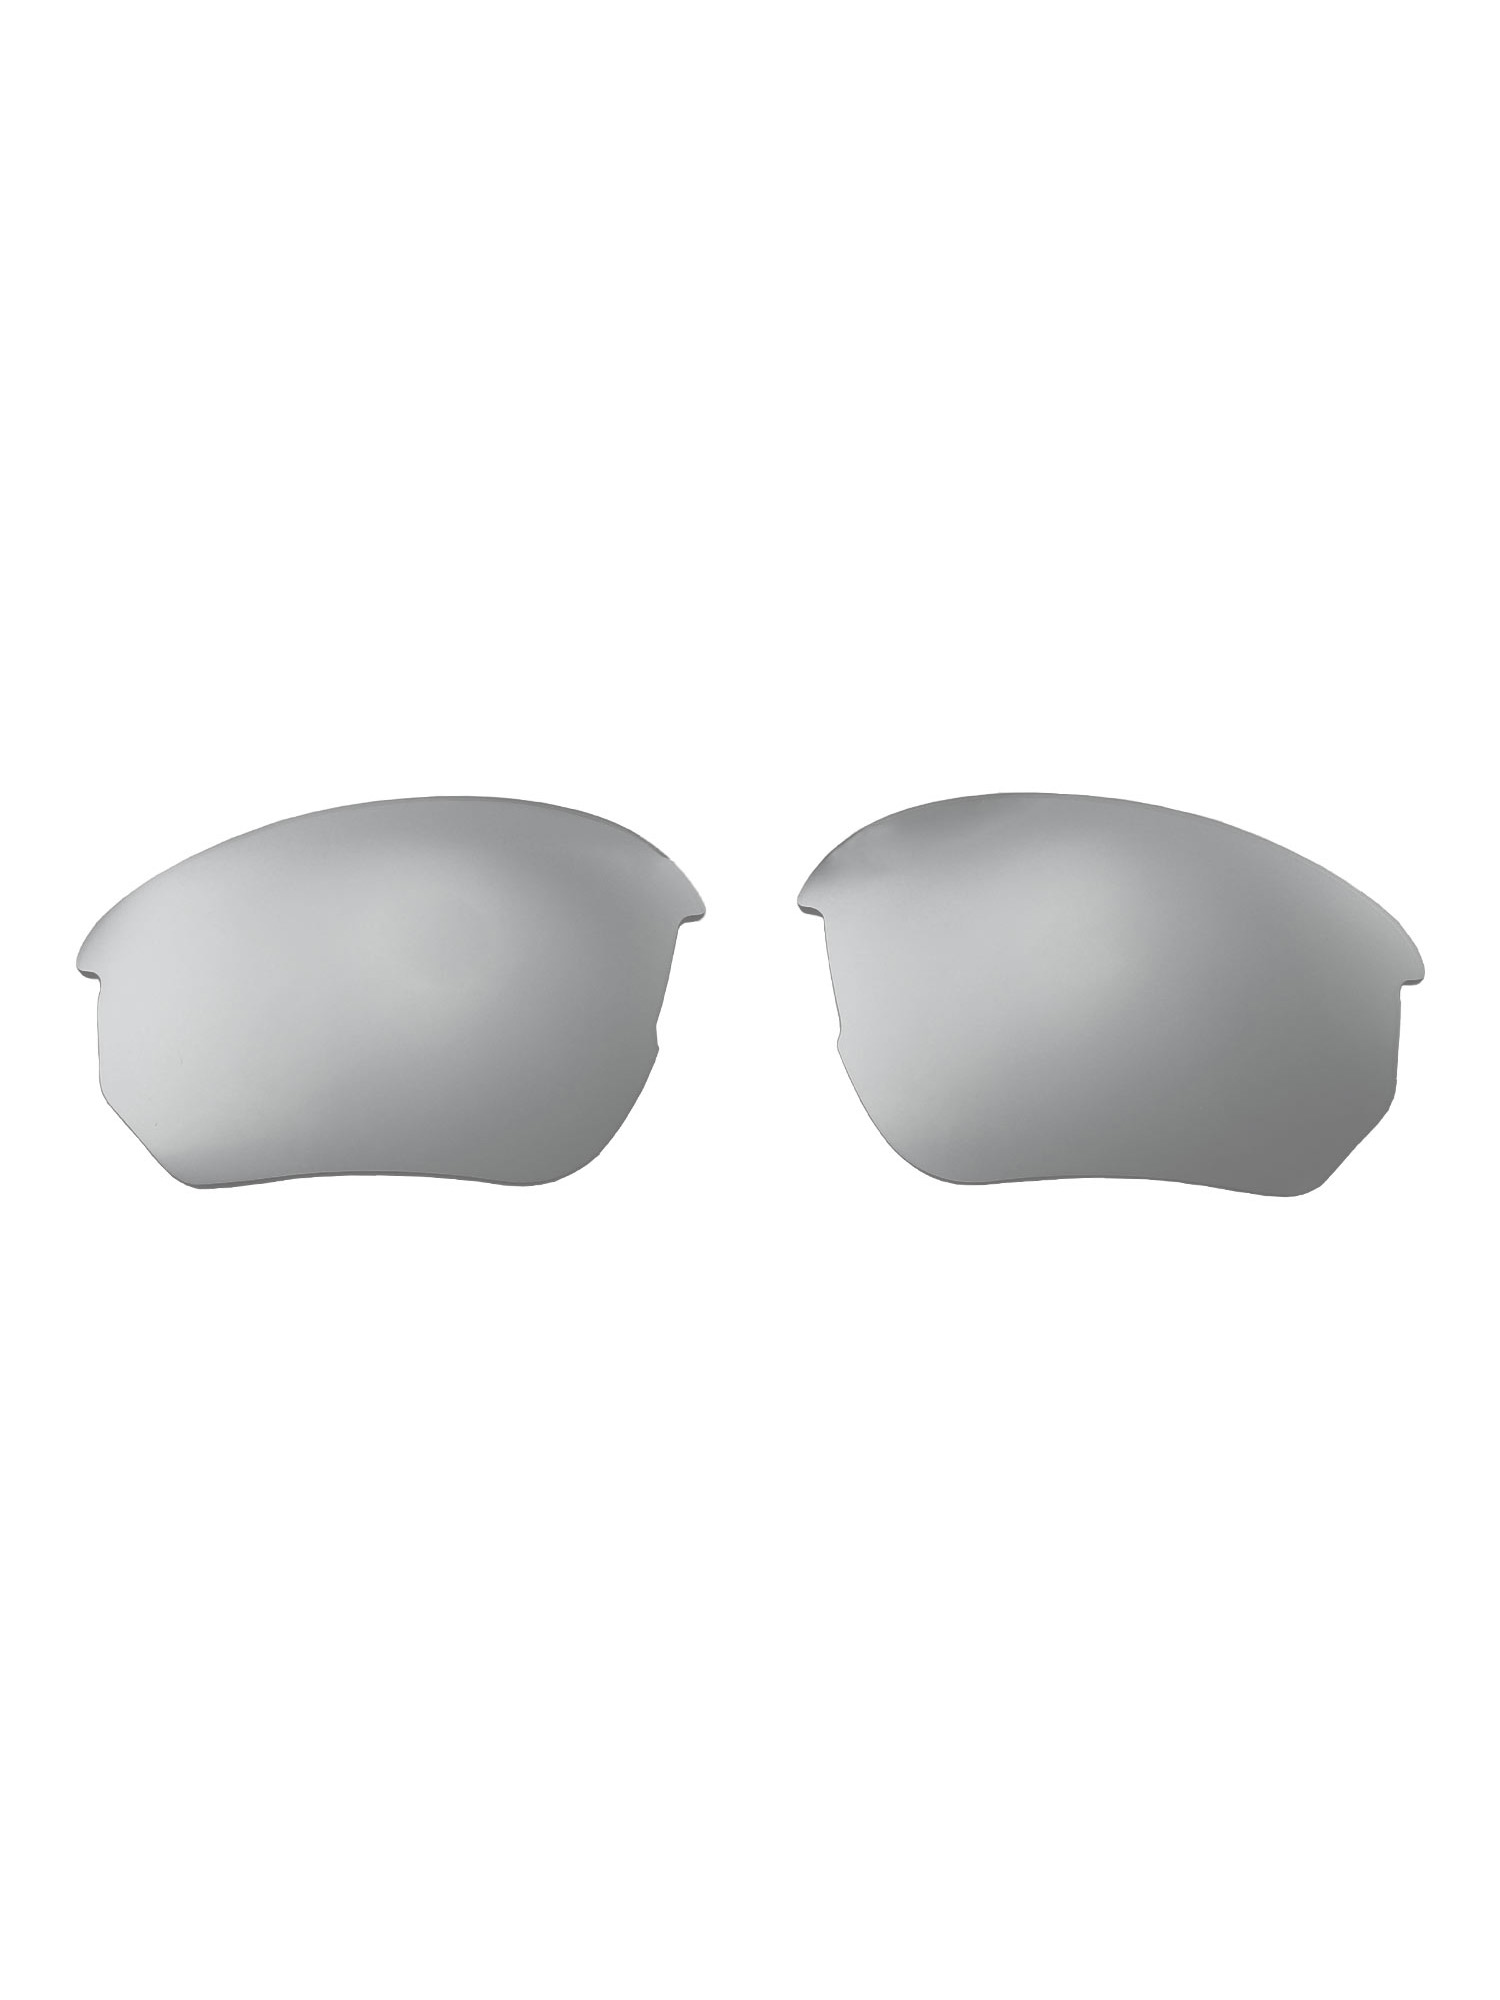 Walleva Titanium Polarized Replacement Lenses for Oakley Flak Beta Sunglasses - image 2 of 6